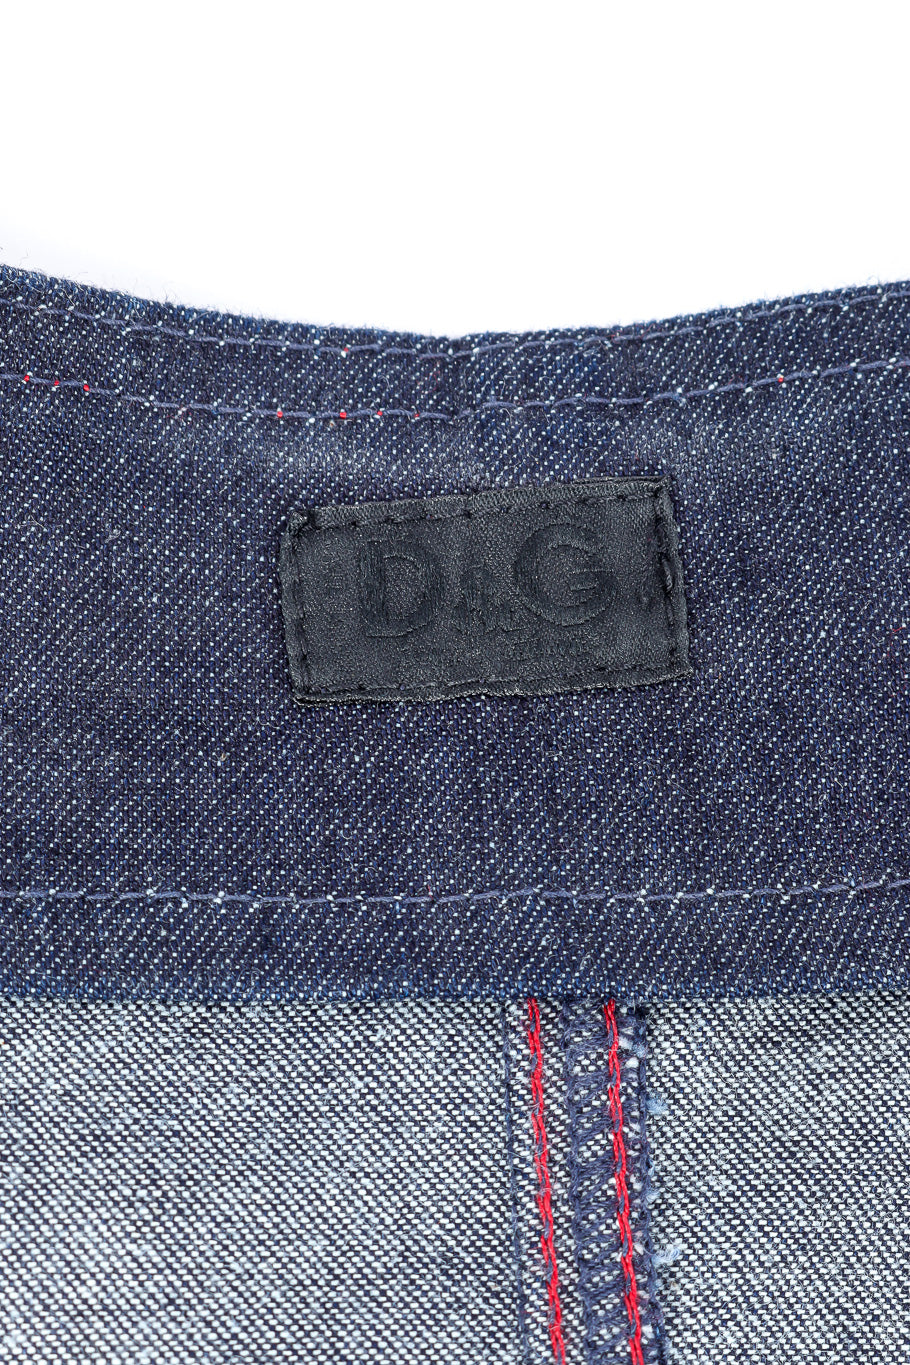 Dolce & Gabbana leather trim designer tag @recessla